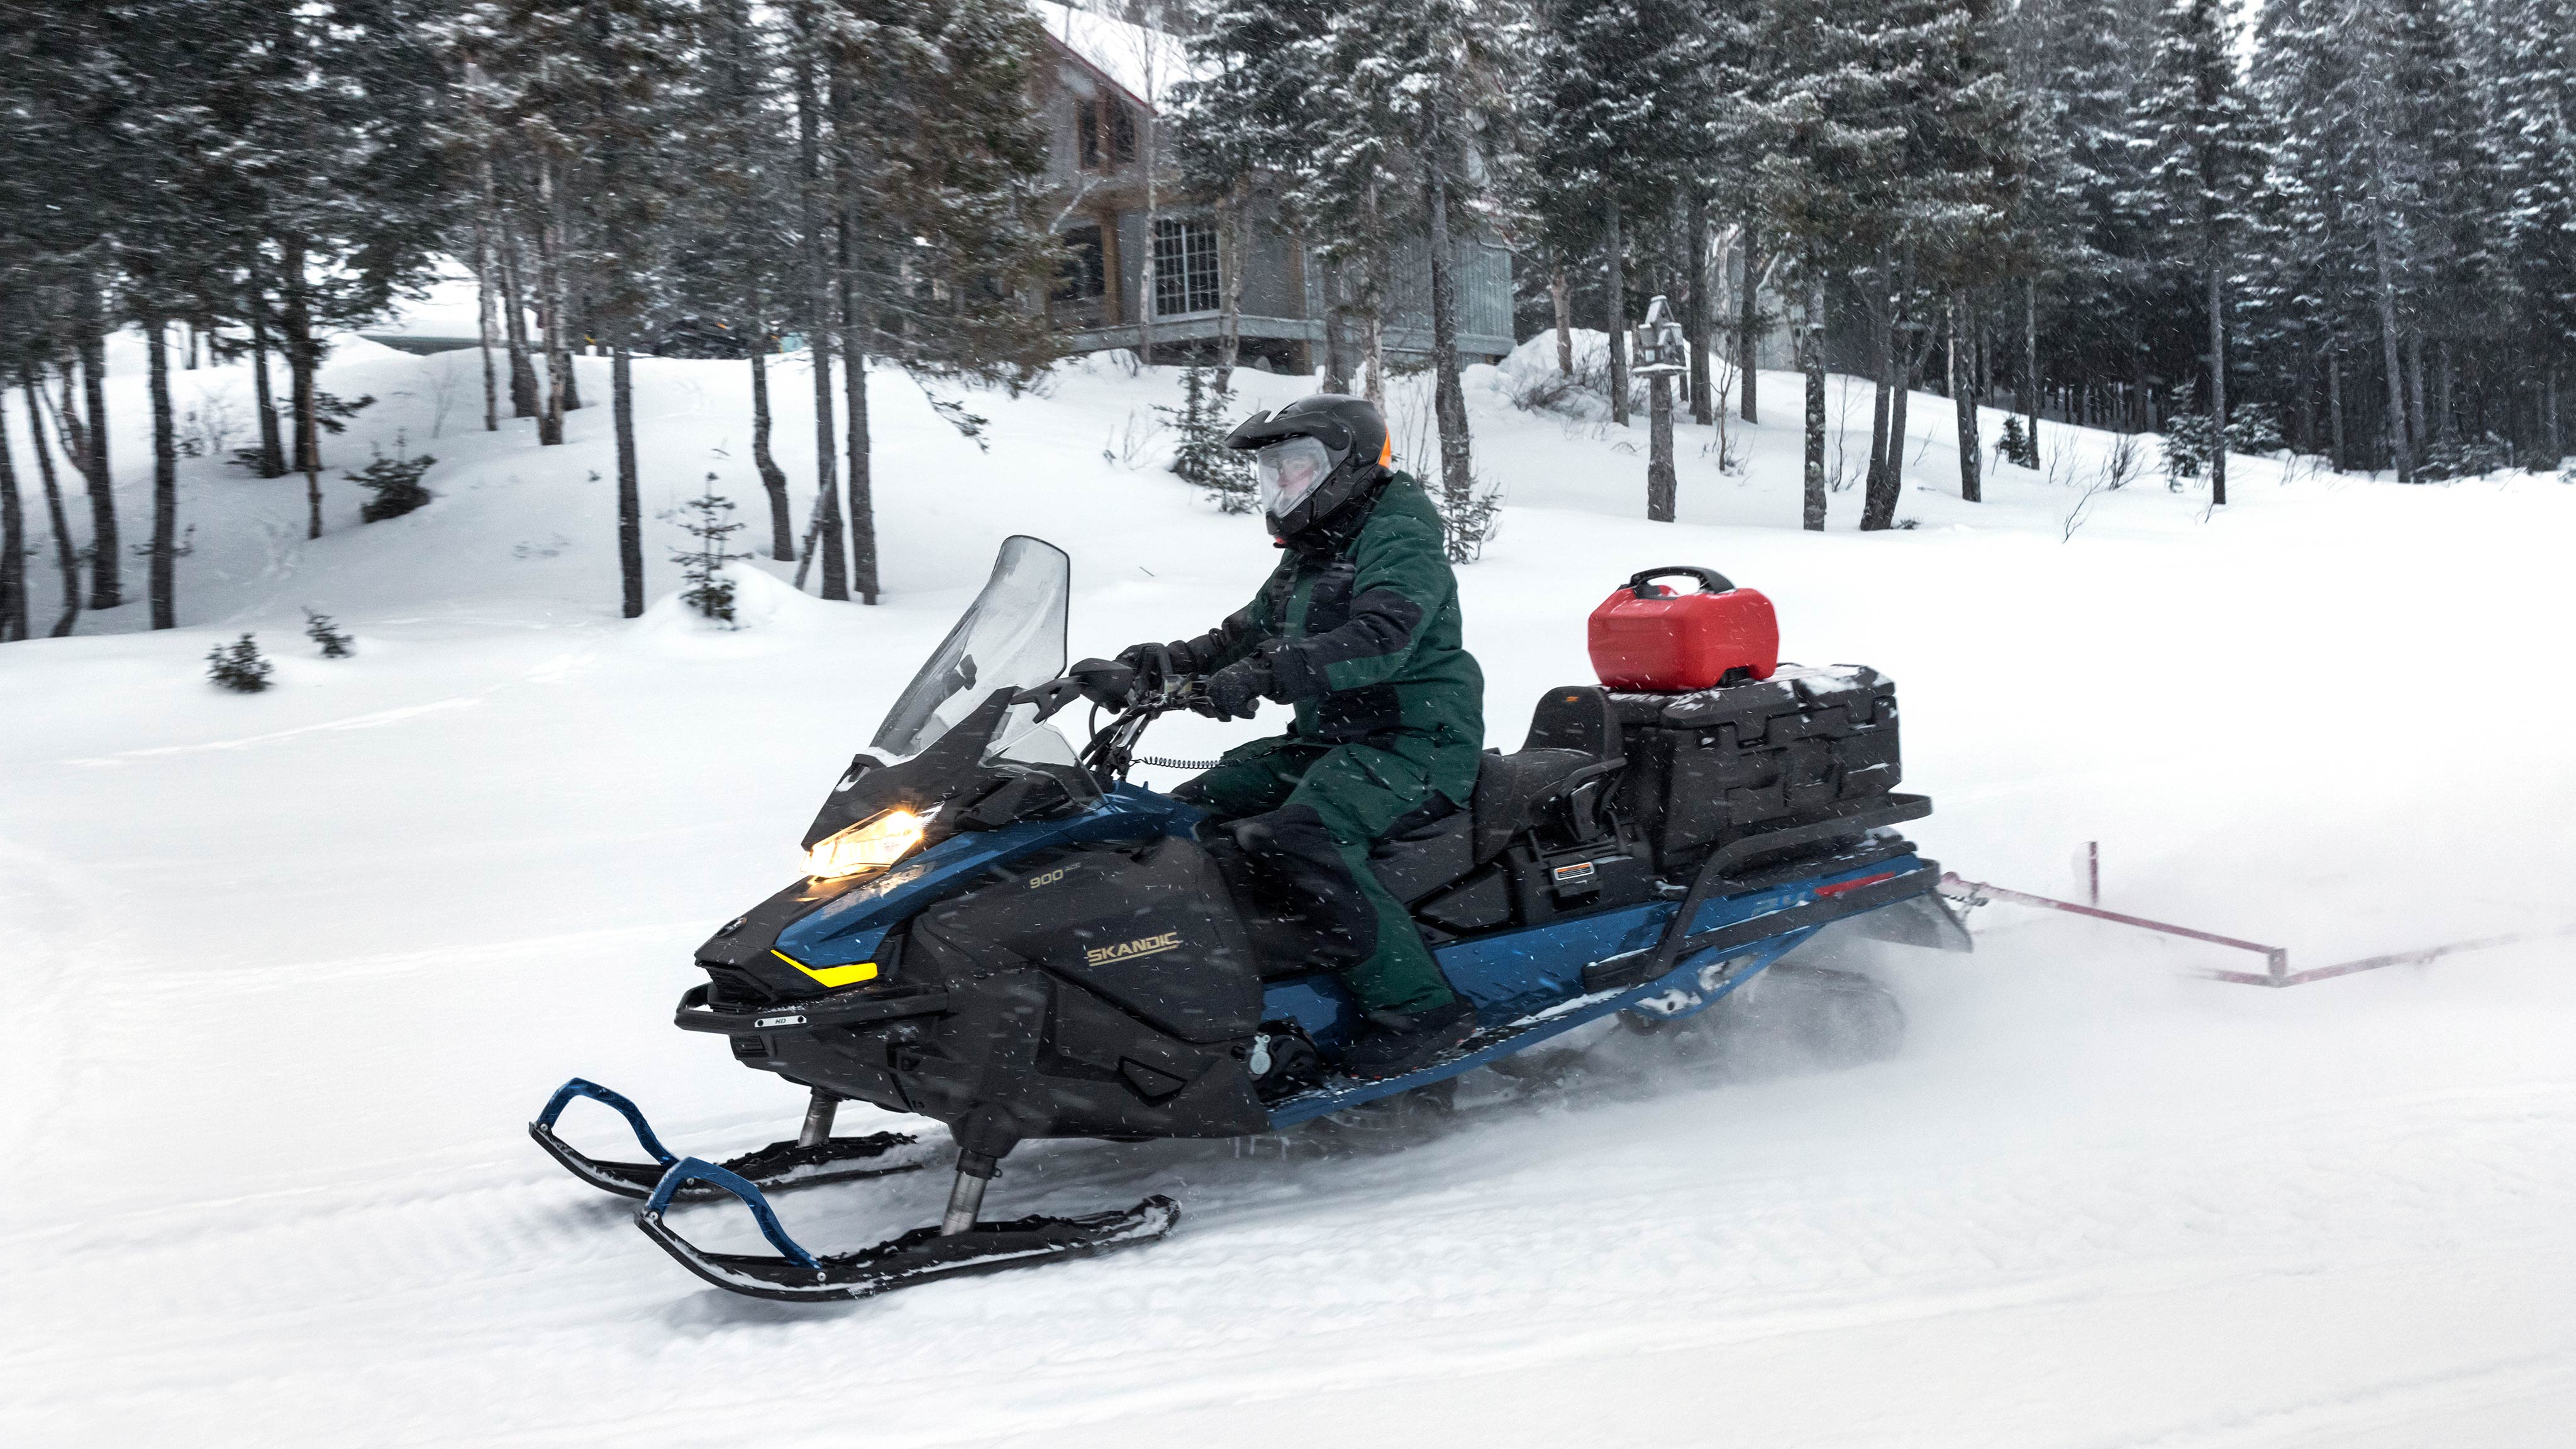 Motoneige utilitaire Ski-Doo Skandic 2025 en randonnée dans la neige